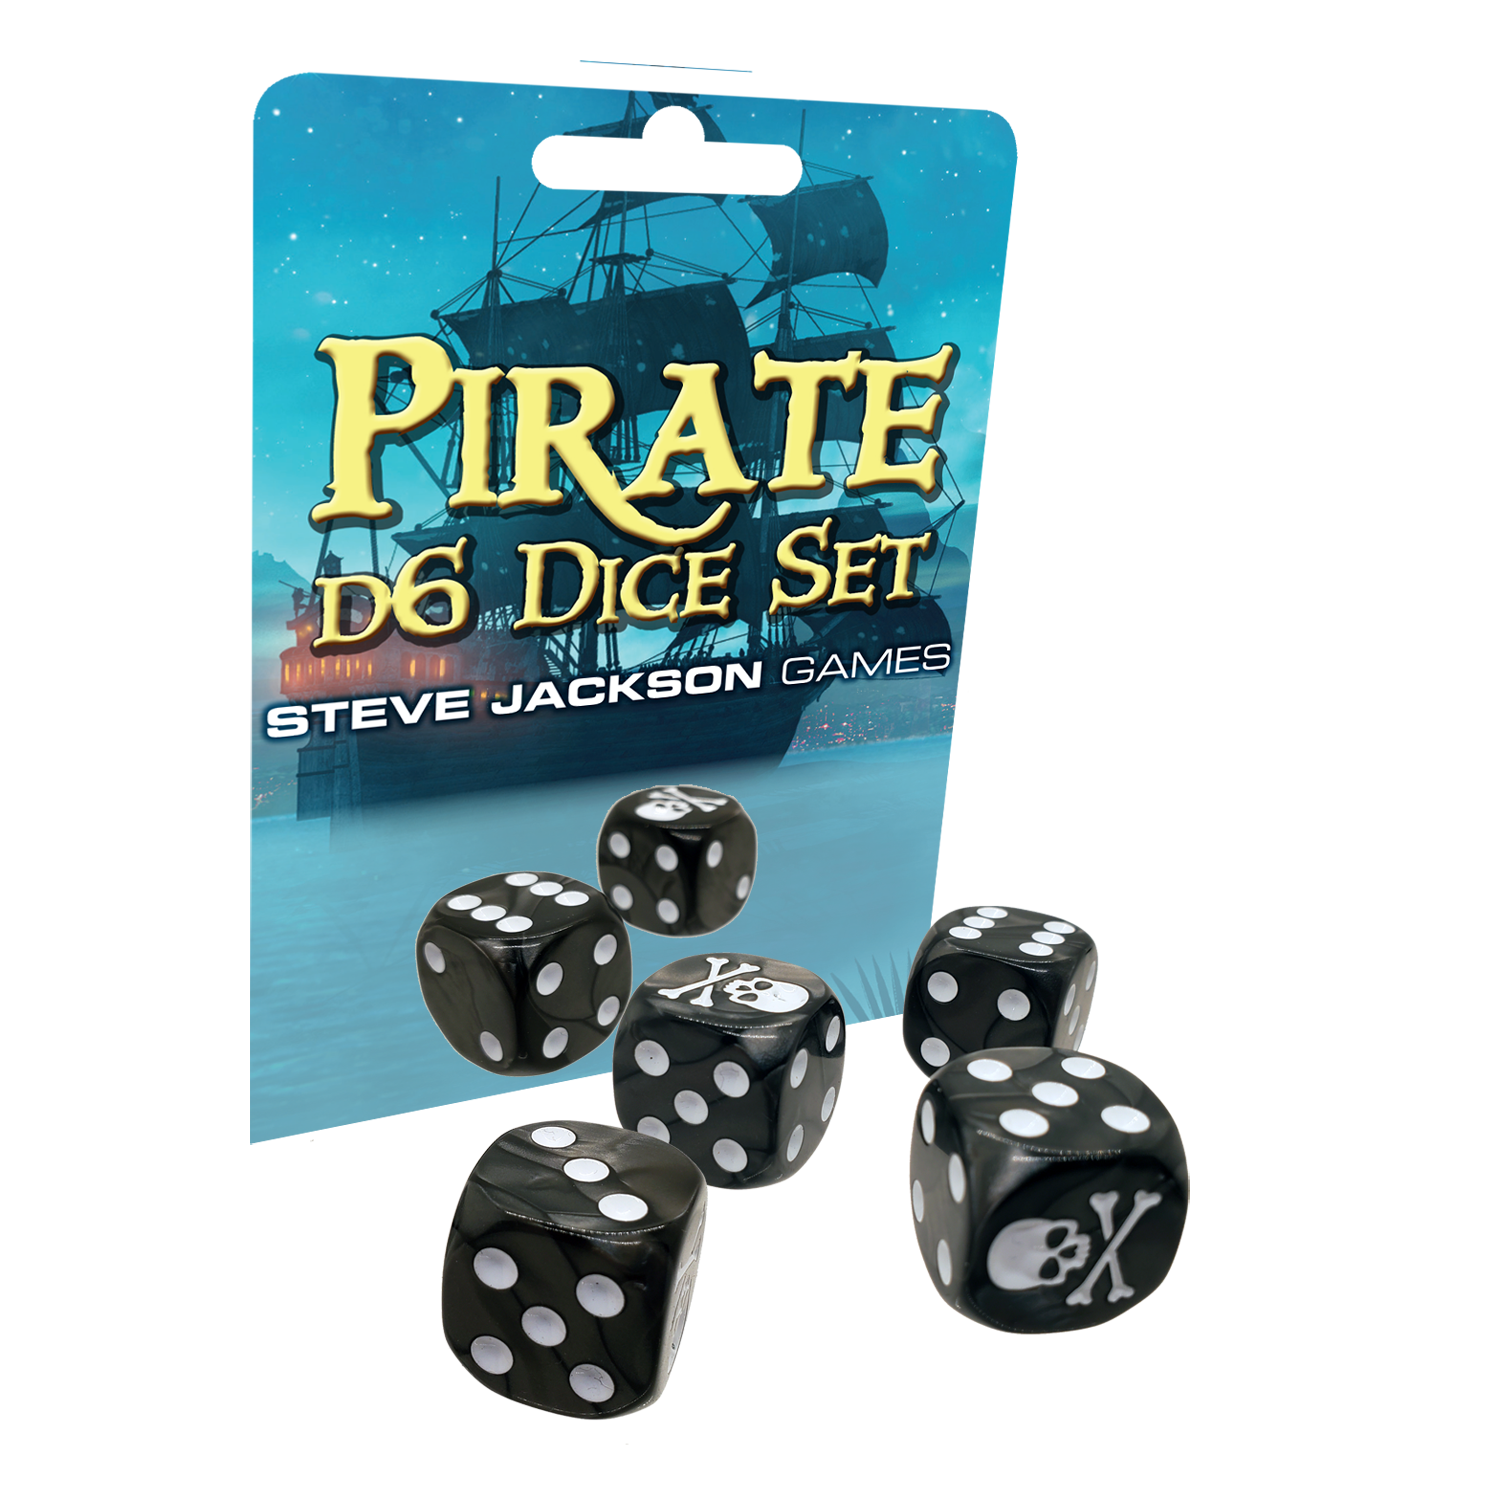 Pirate d6 Dice Set